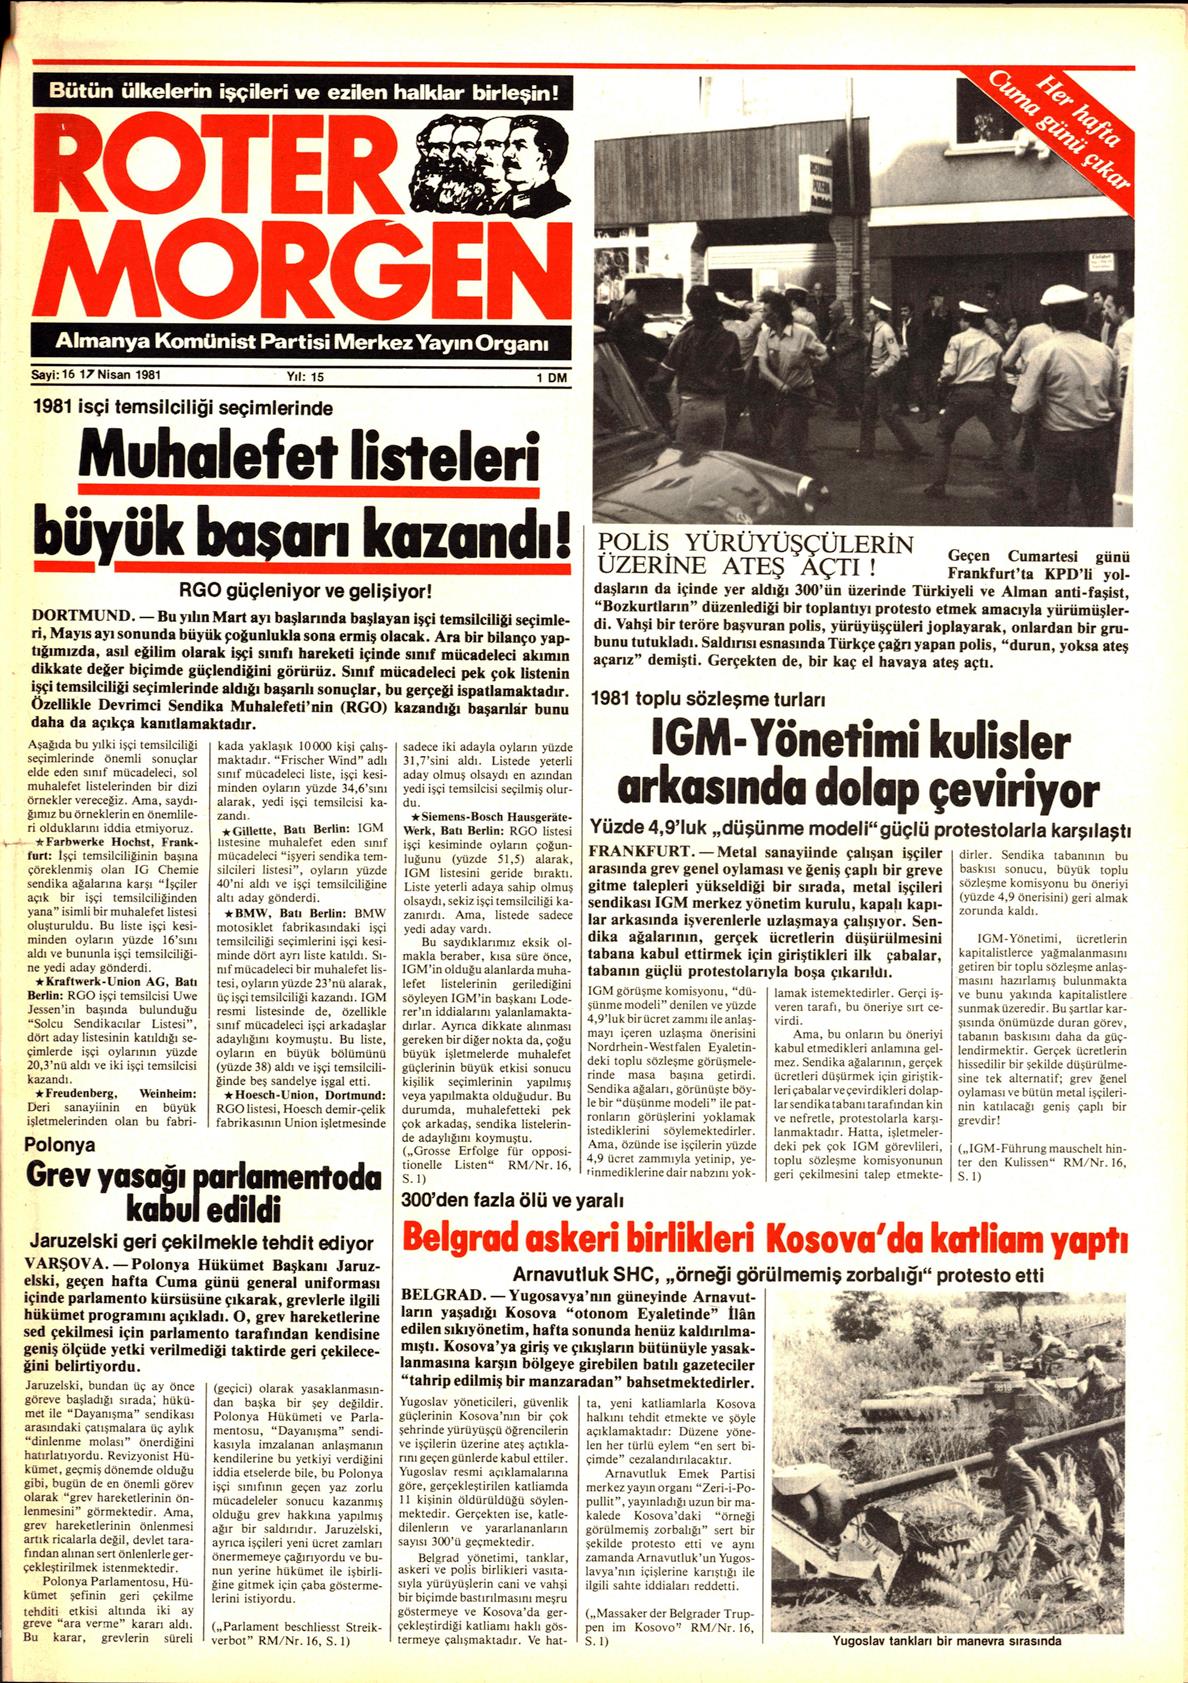 Roter Morgen, 15. Jg., 17. April 1981, Nr. 16, Seite 14